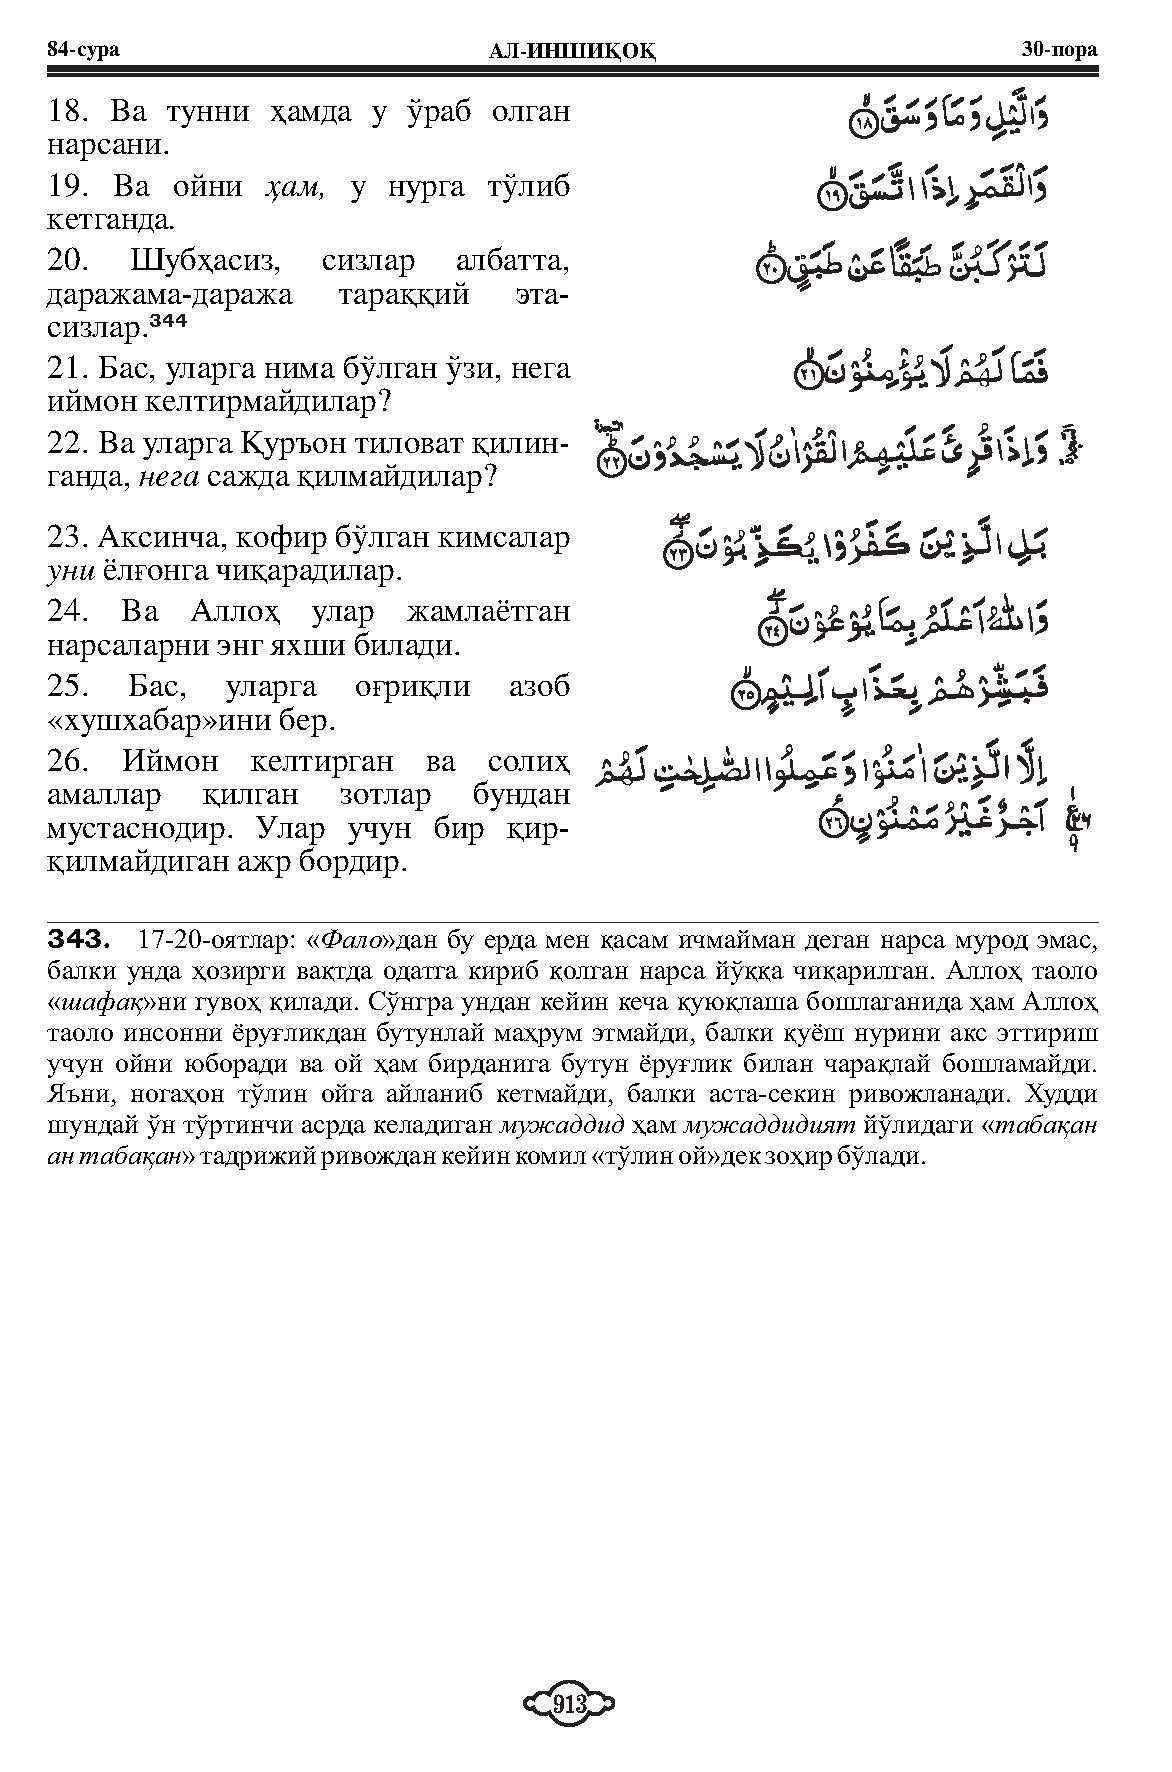 084-al-inshi8qaq_Page_3